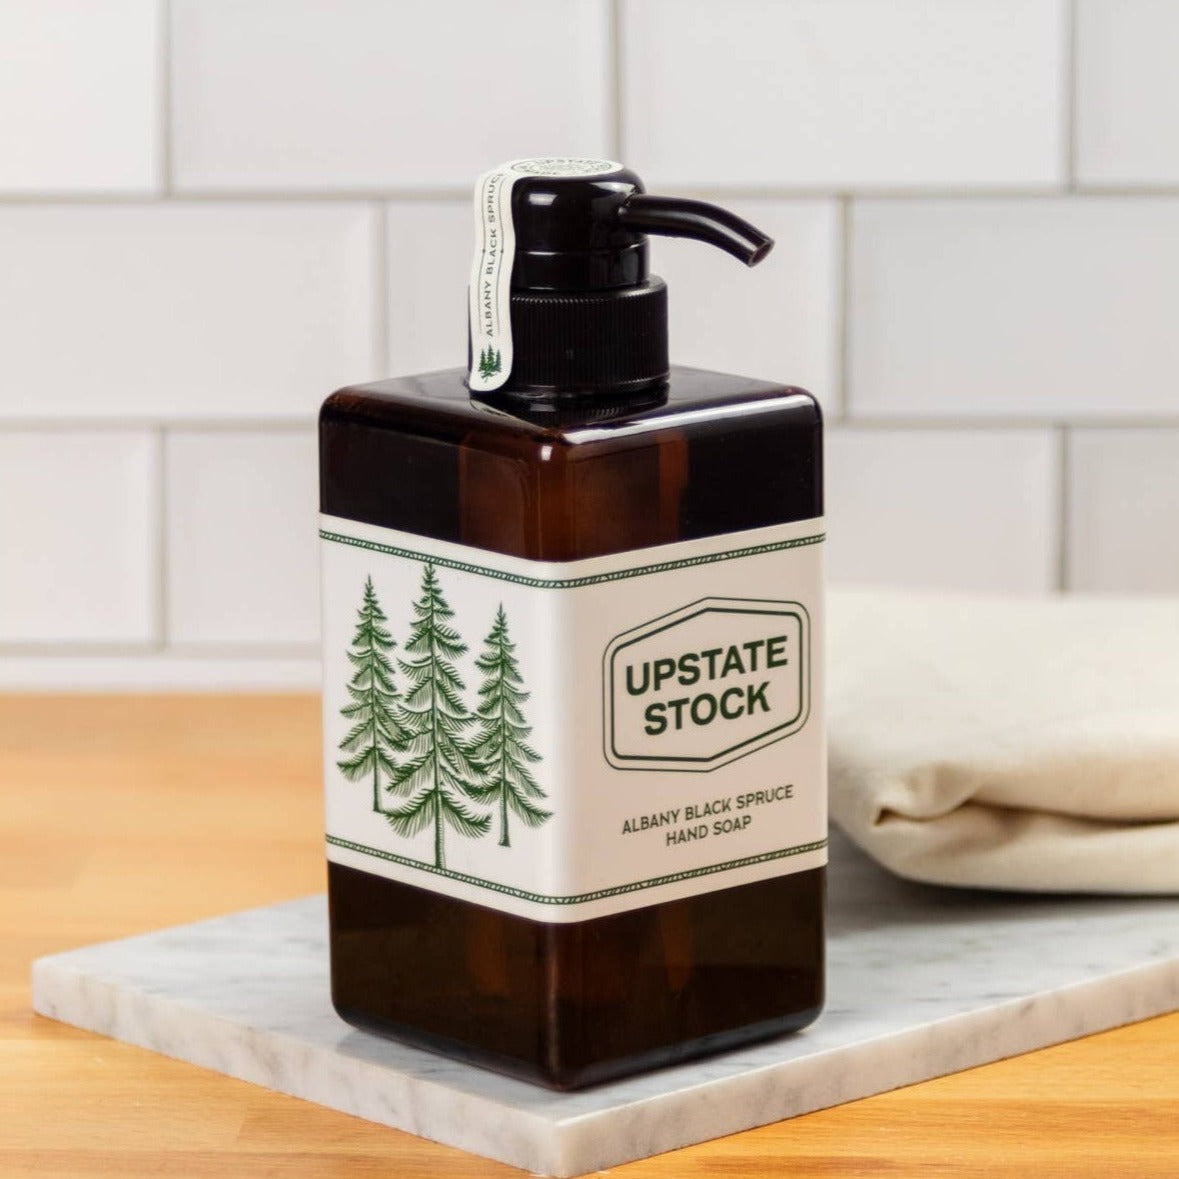 Albany Black Spruce - Hand Soap